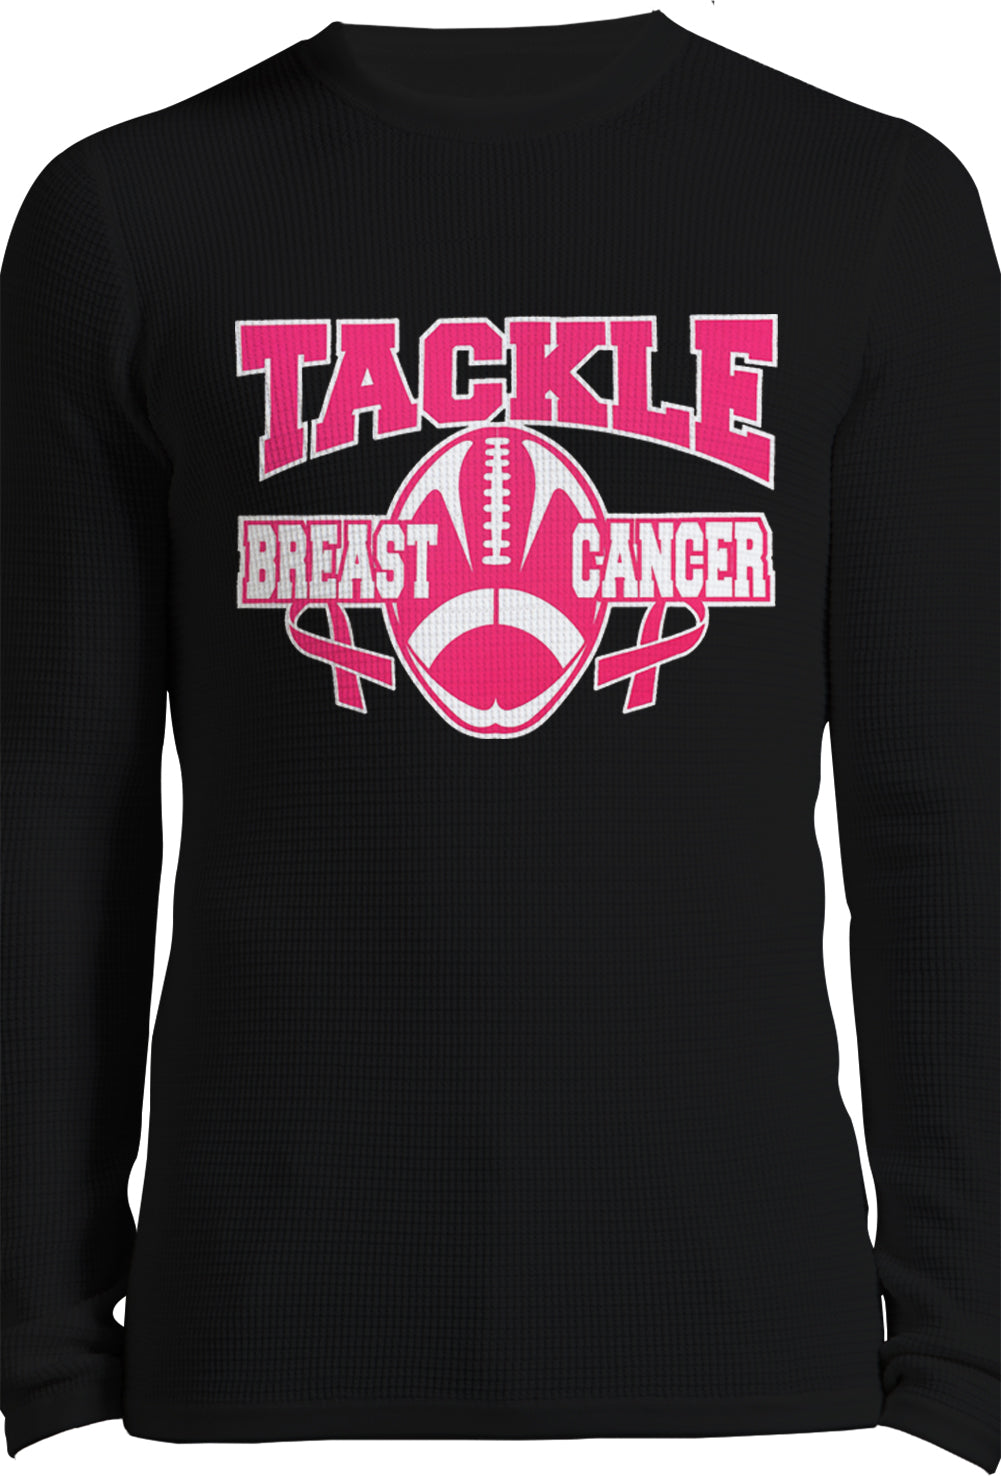 Tackle Breast Cancer Thermal Long Sleeve Shirt